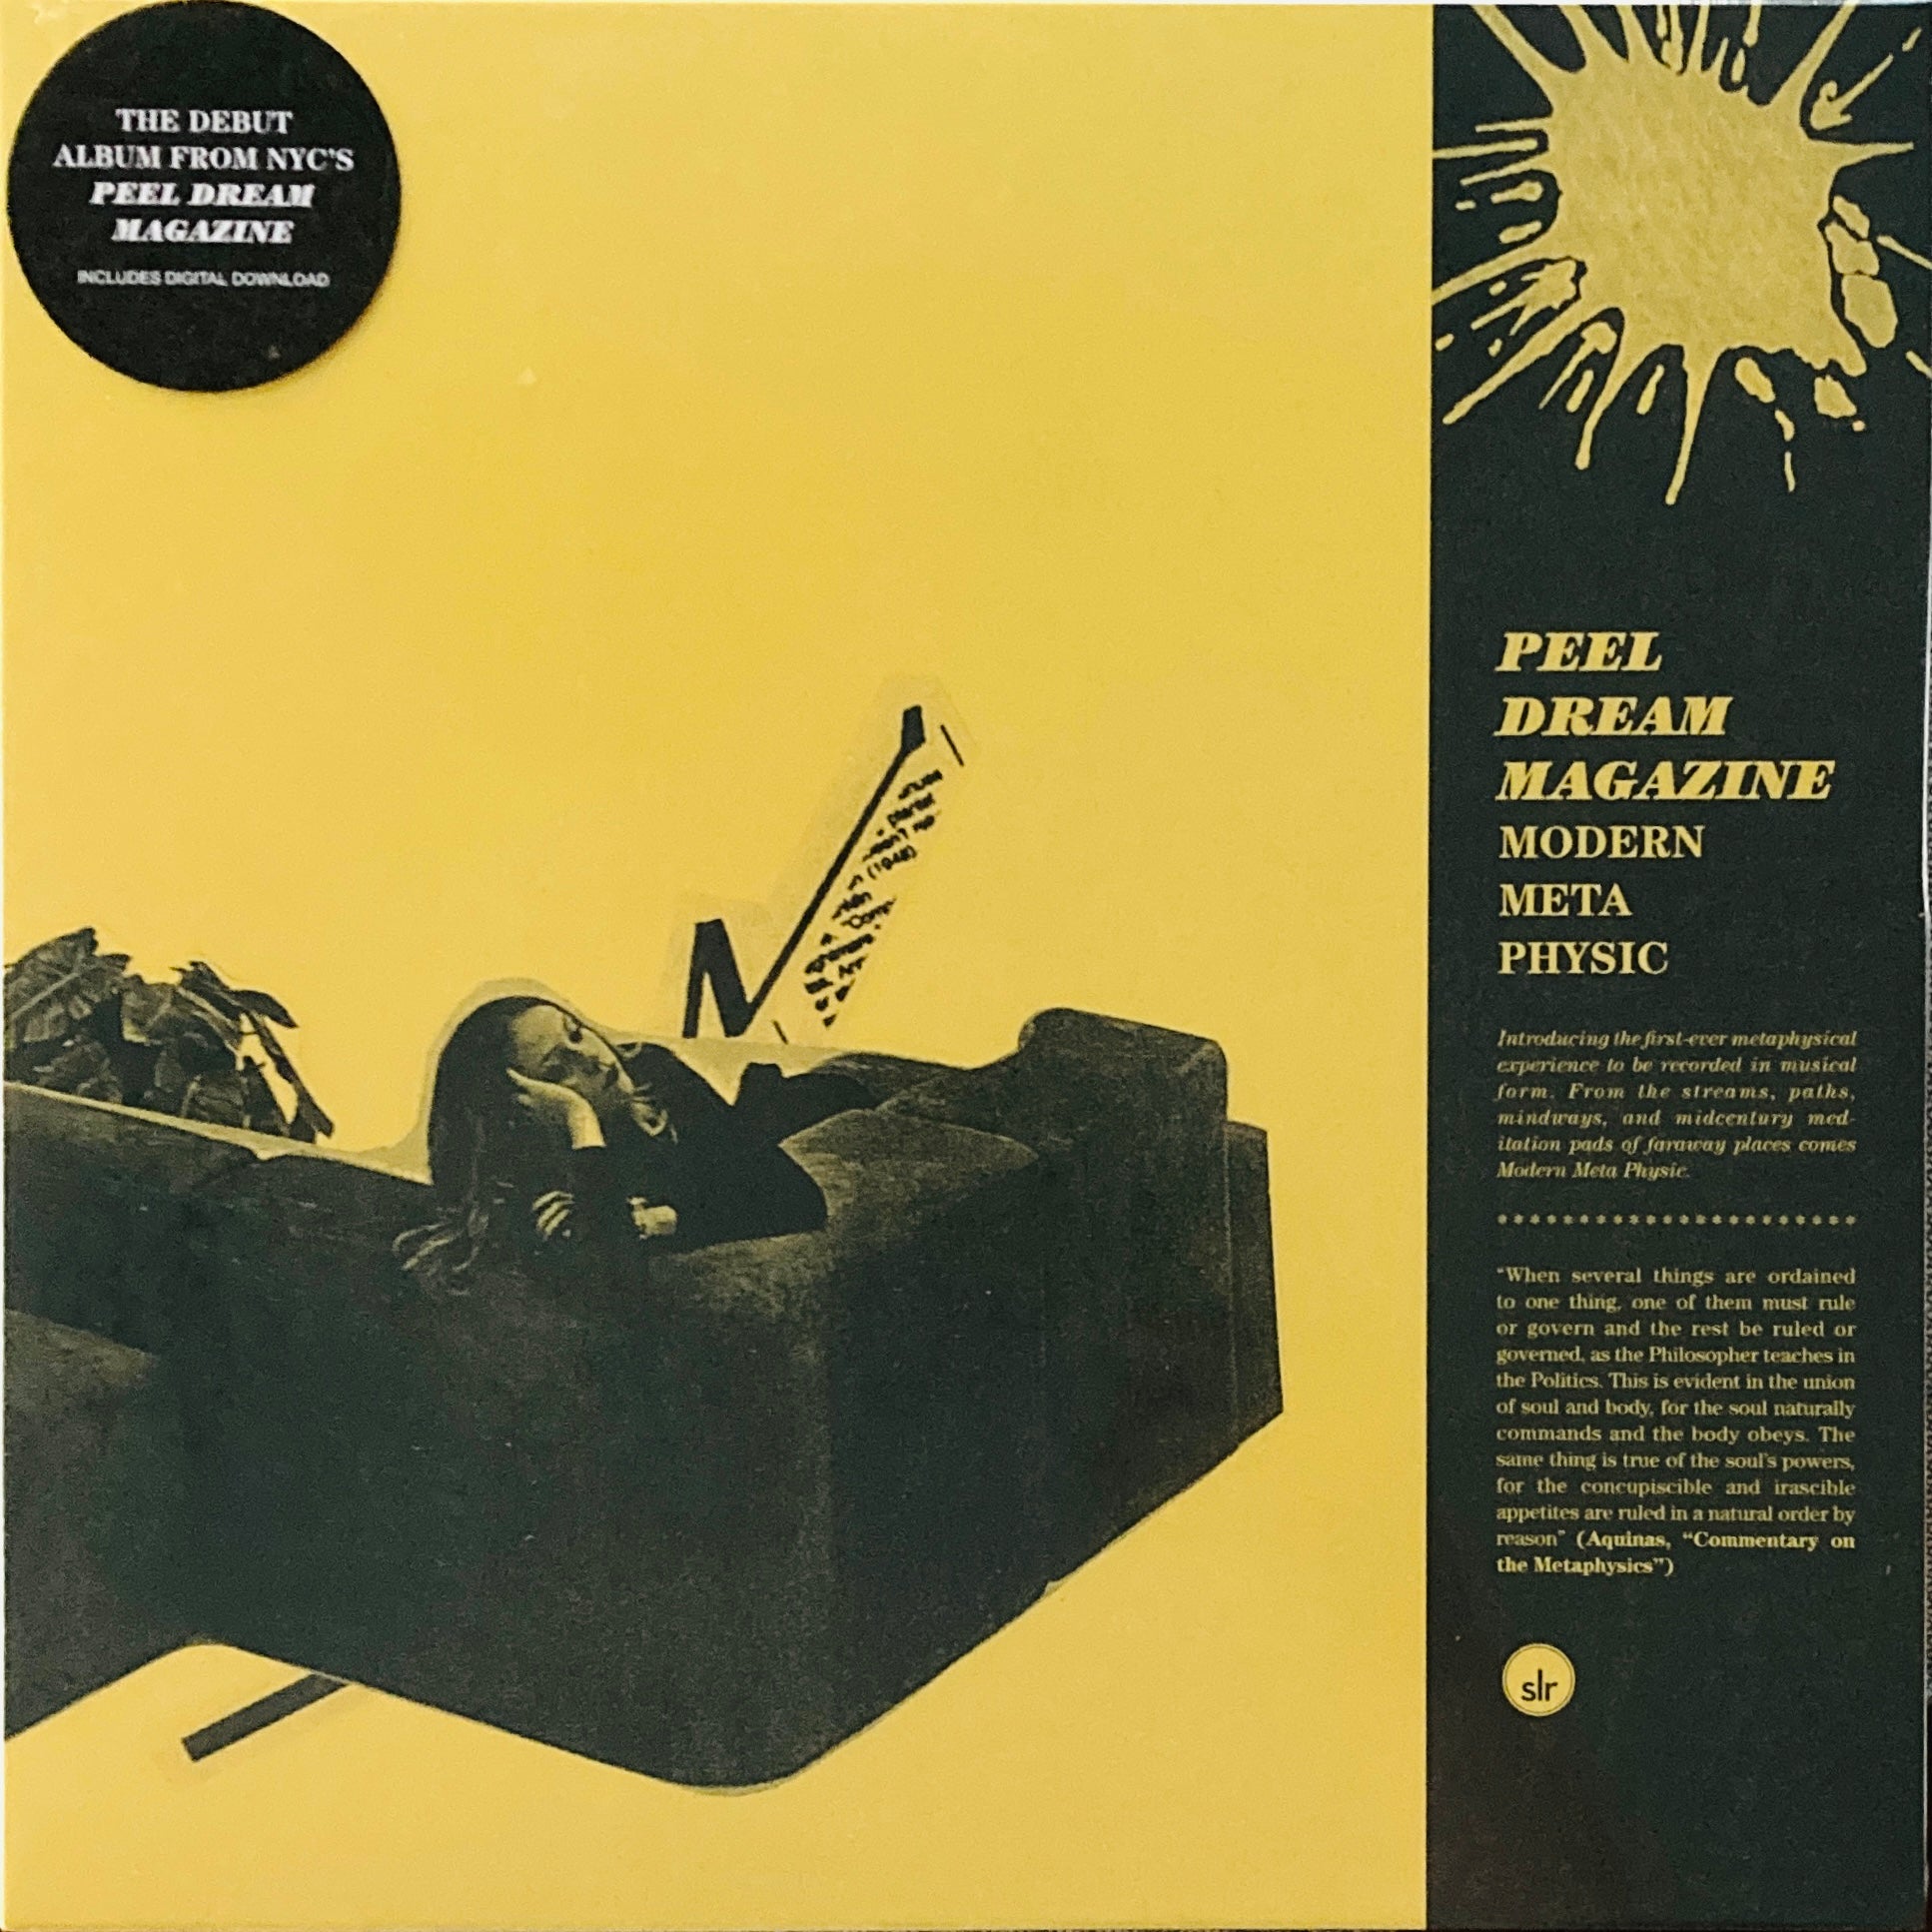 Peel Dream Magazine “Modern Meta Physic” LP (2018)